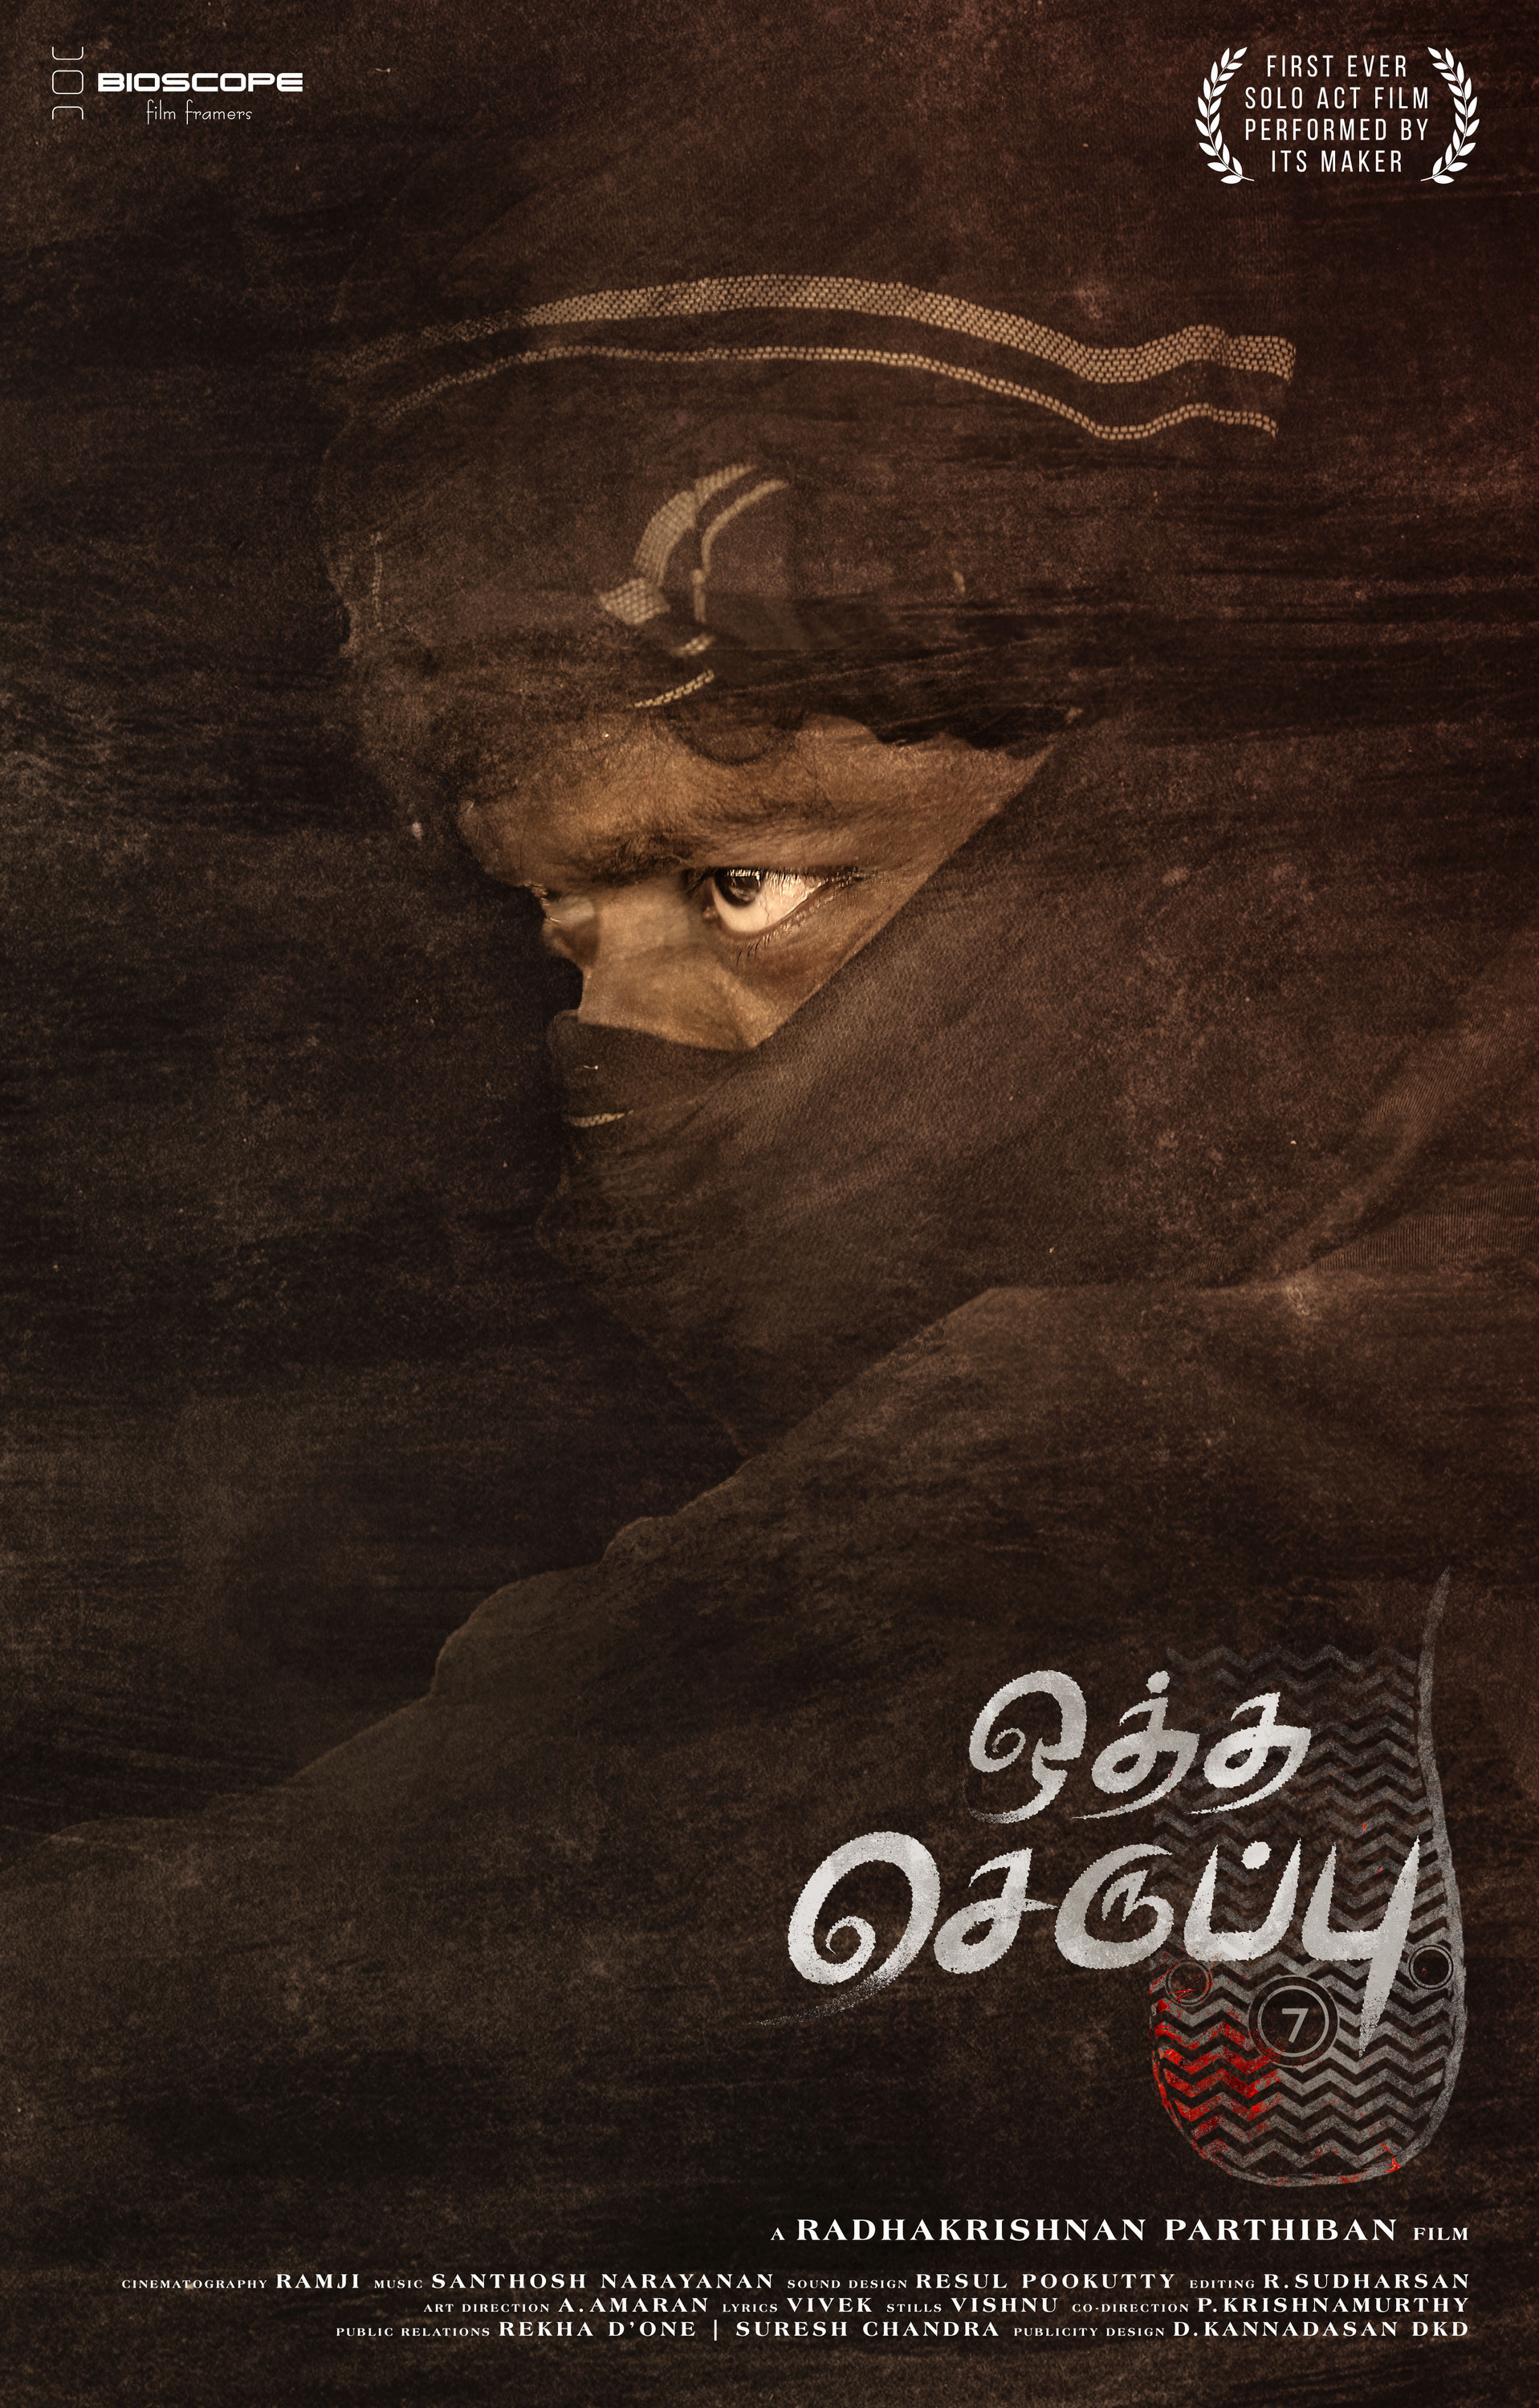 Mega Sized Movie Poster Image for Oththa Seruppu (#6 of 6)